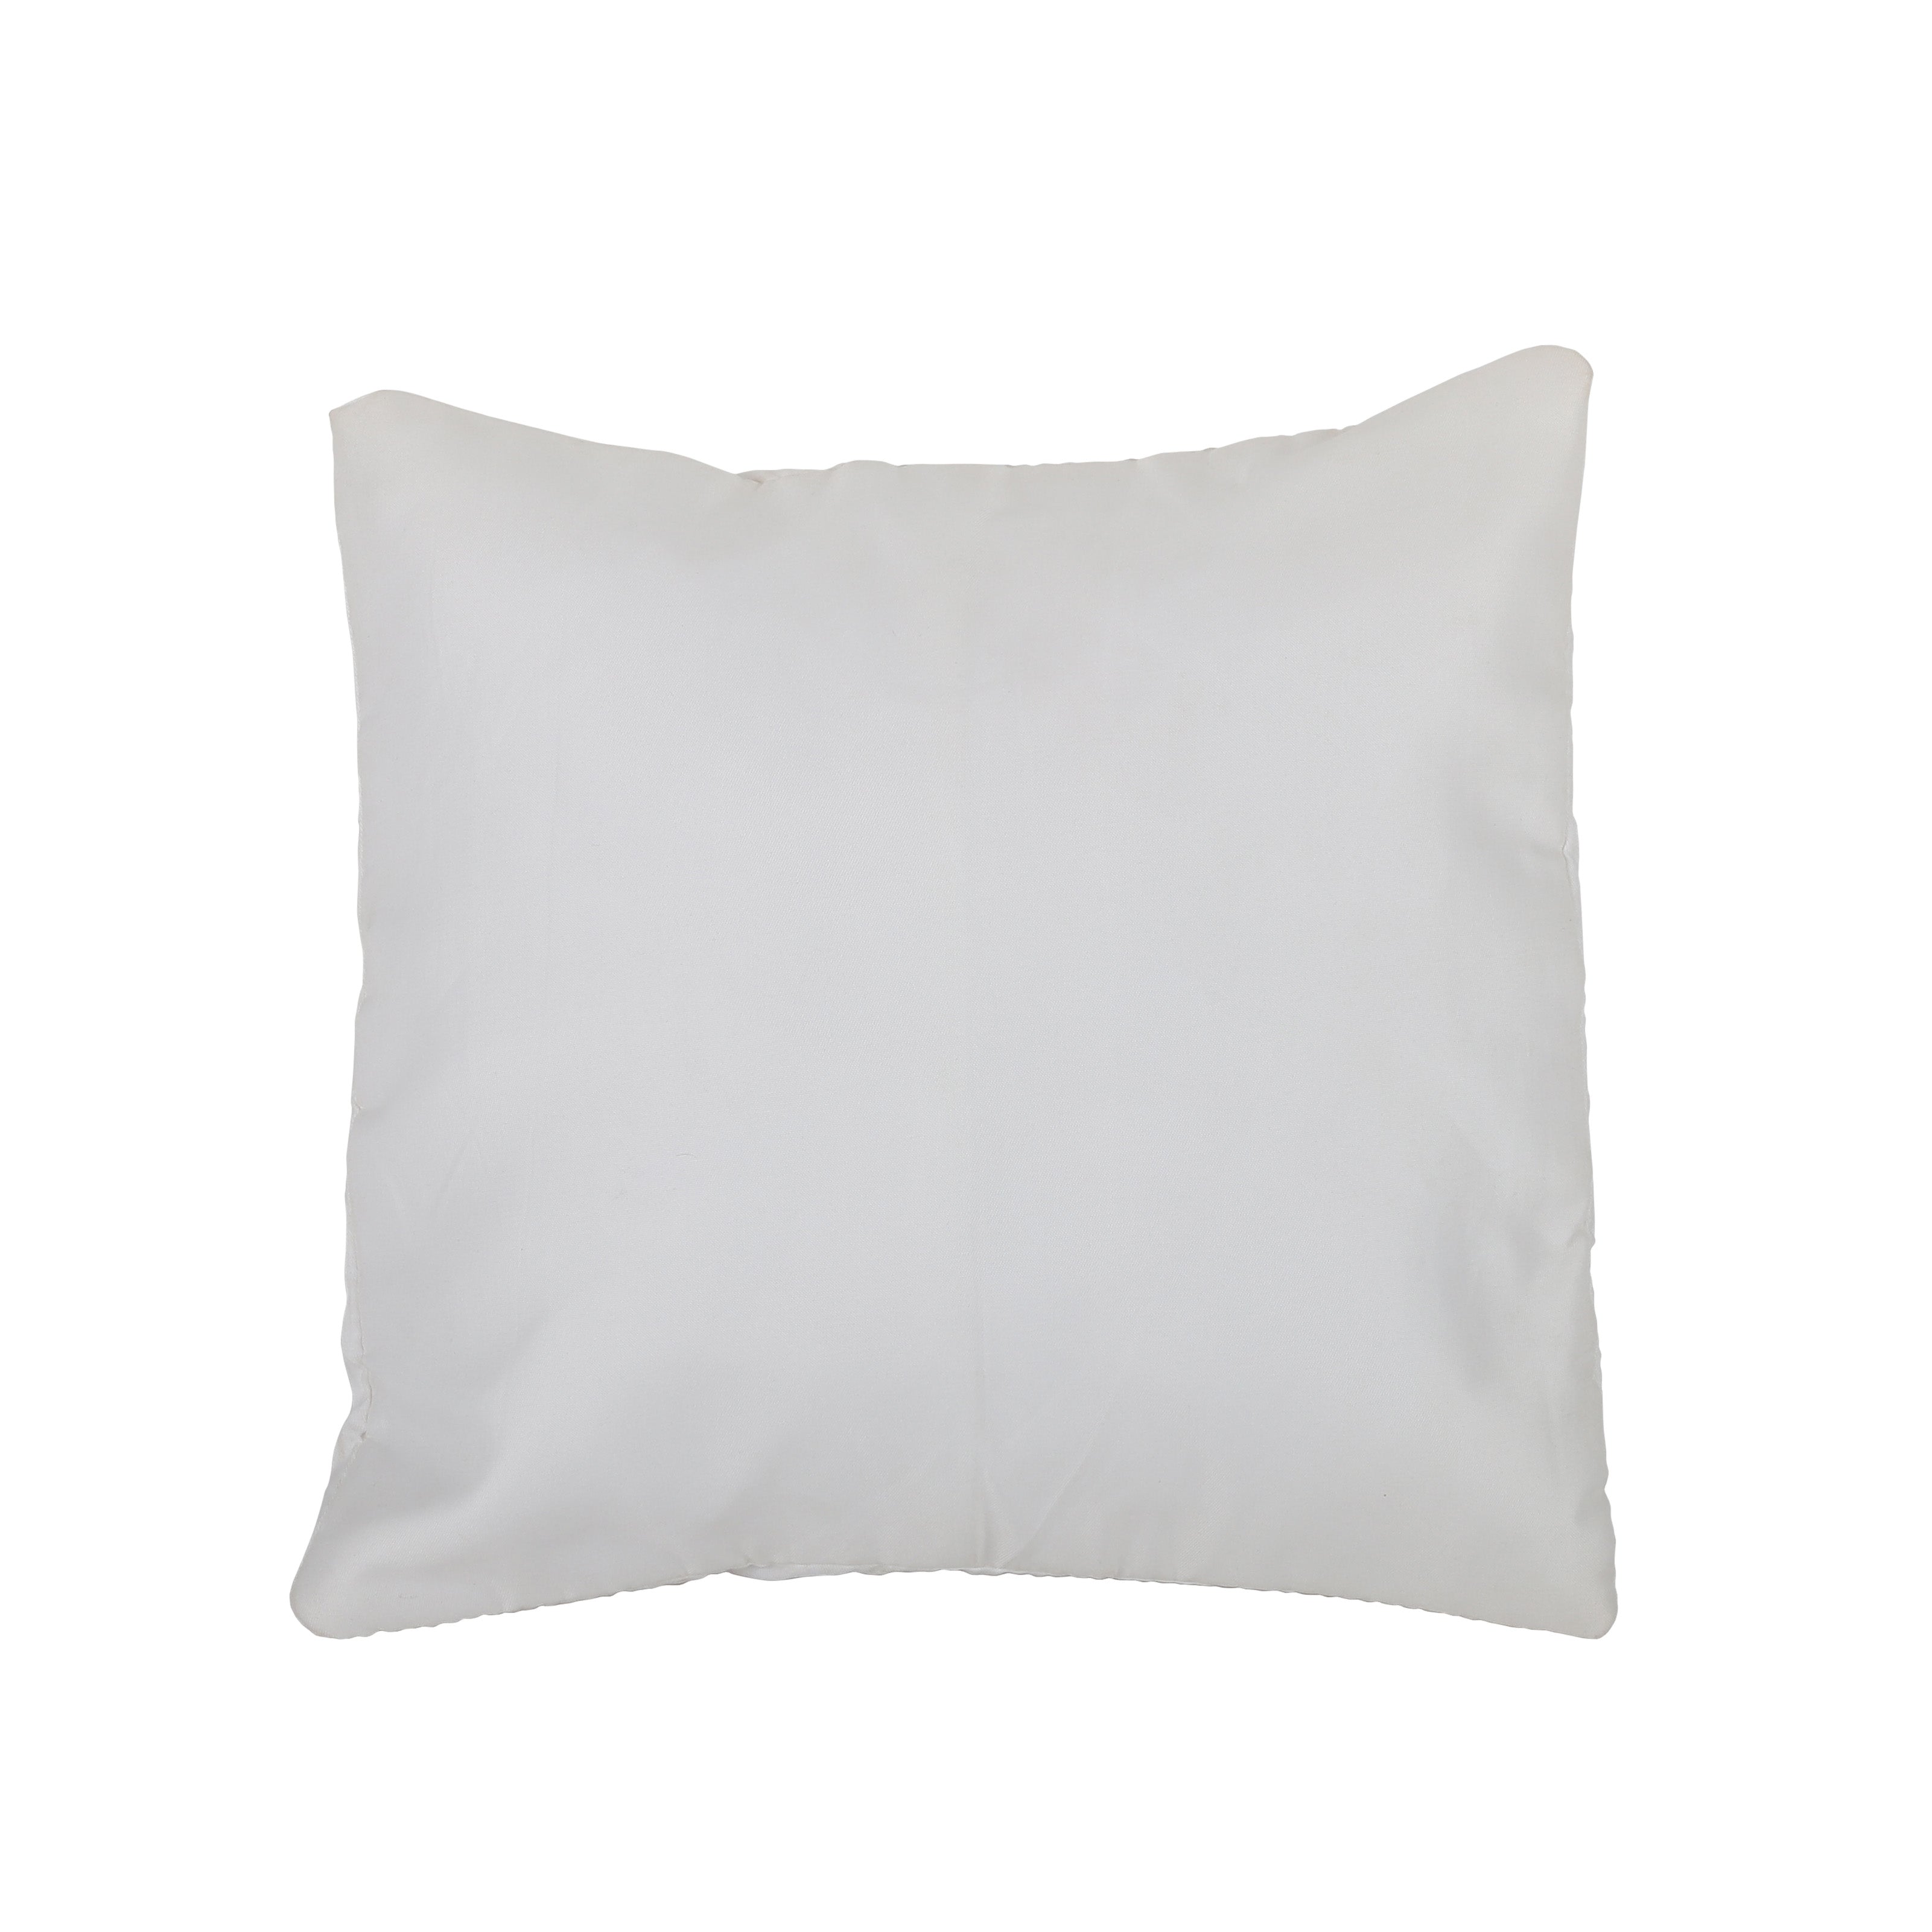 Customisable Pillow